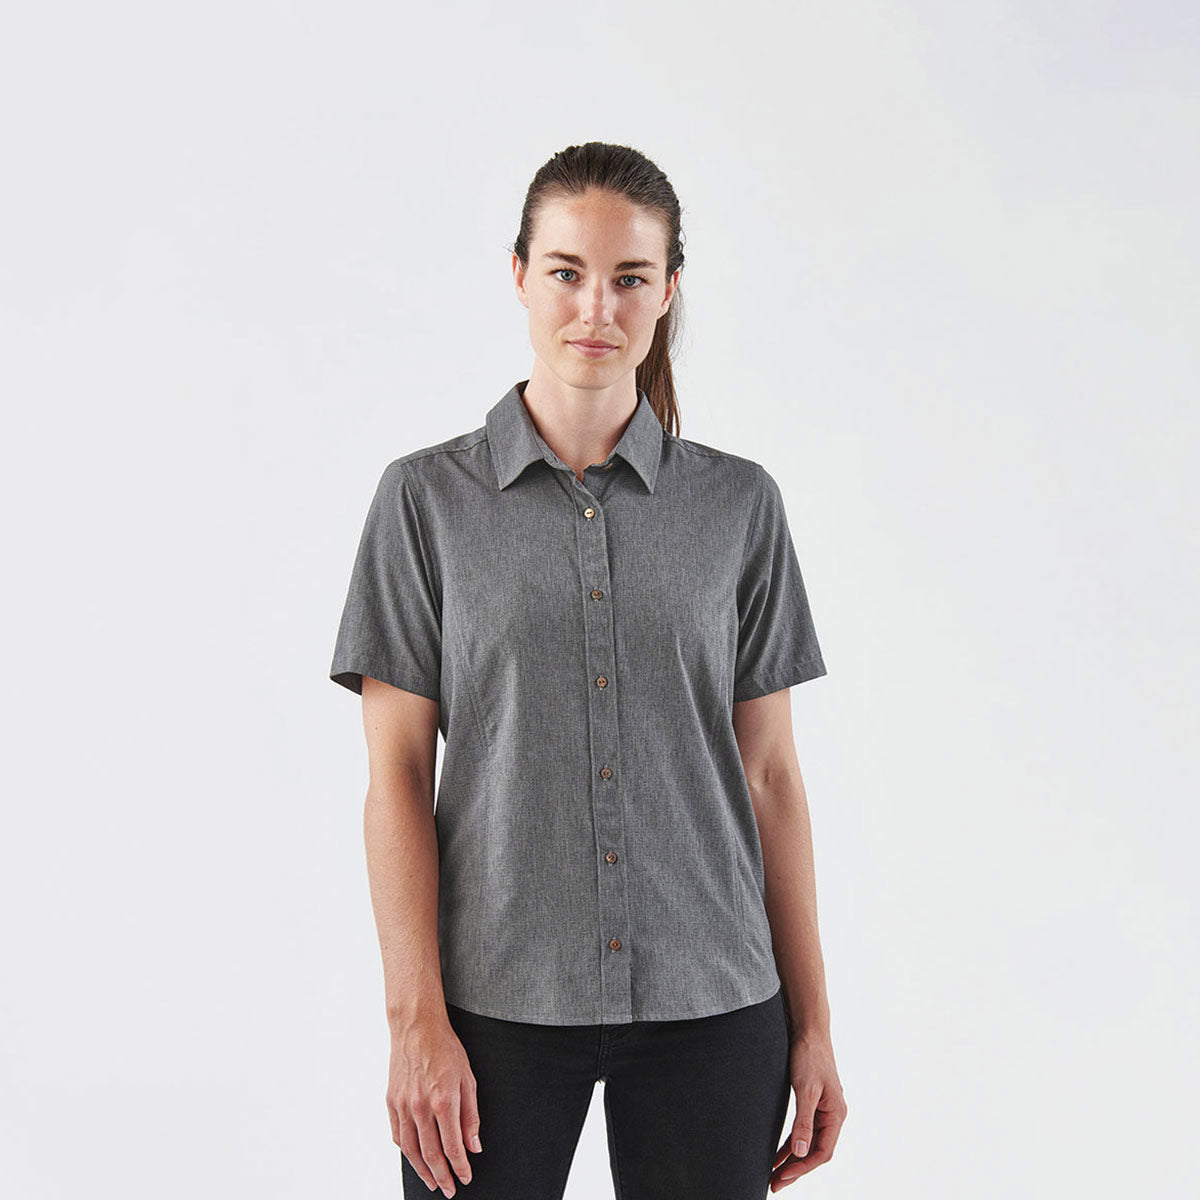 Women's Azores Quick Dry Shirt - Stormtech Canada Retail